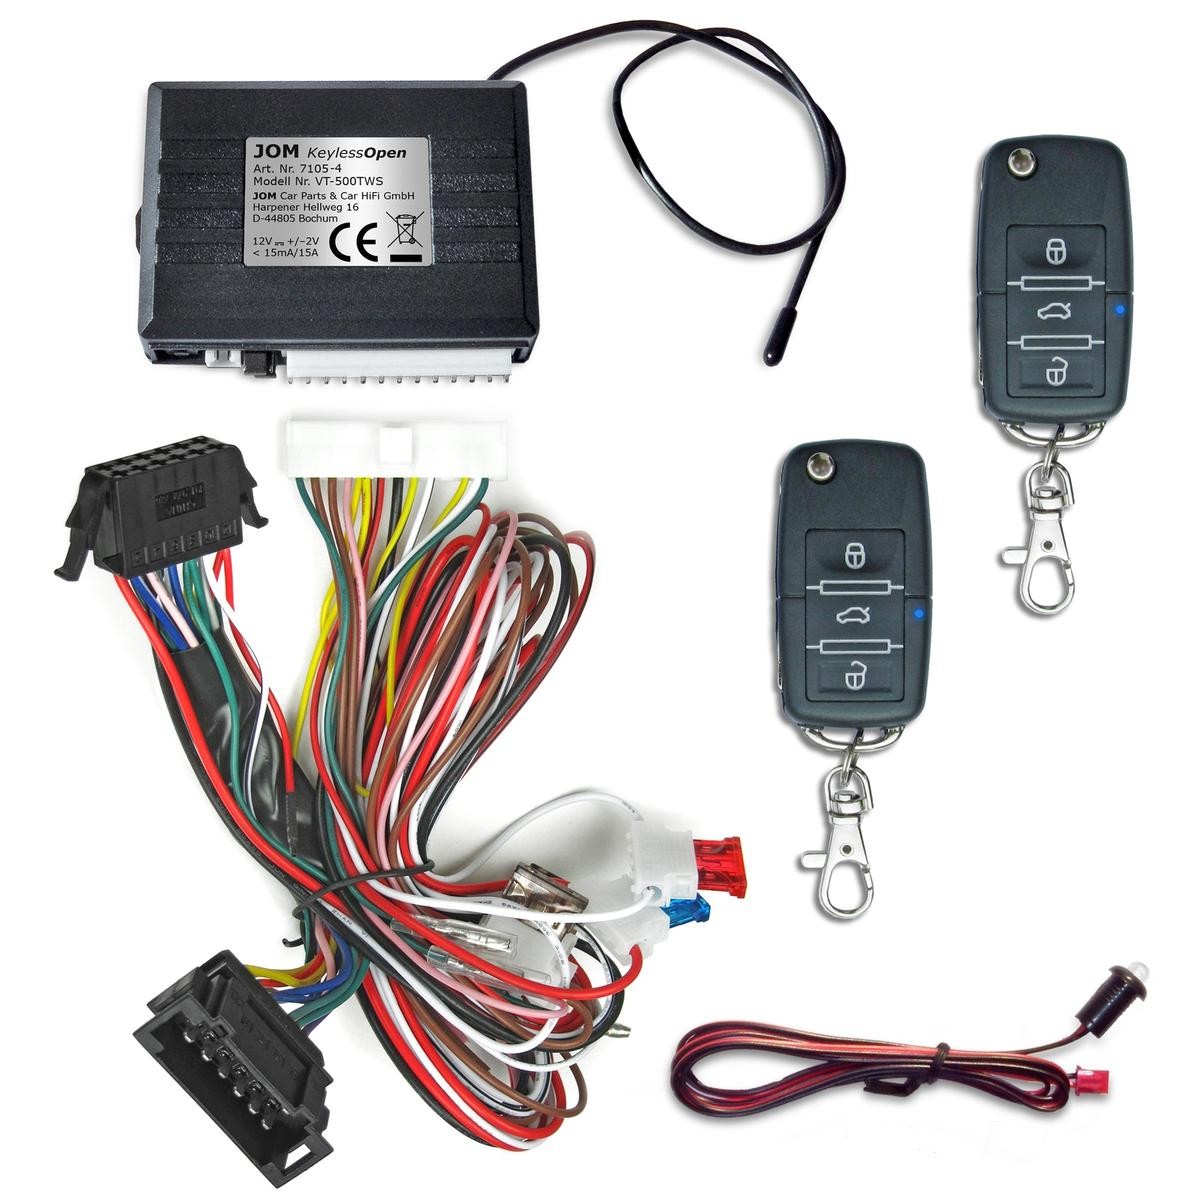 JOM KeylessOpen-S Remote Control, central locking 7105-3 buy